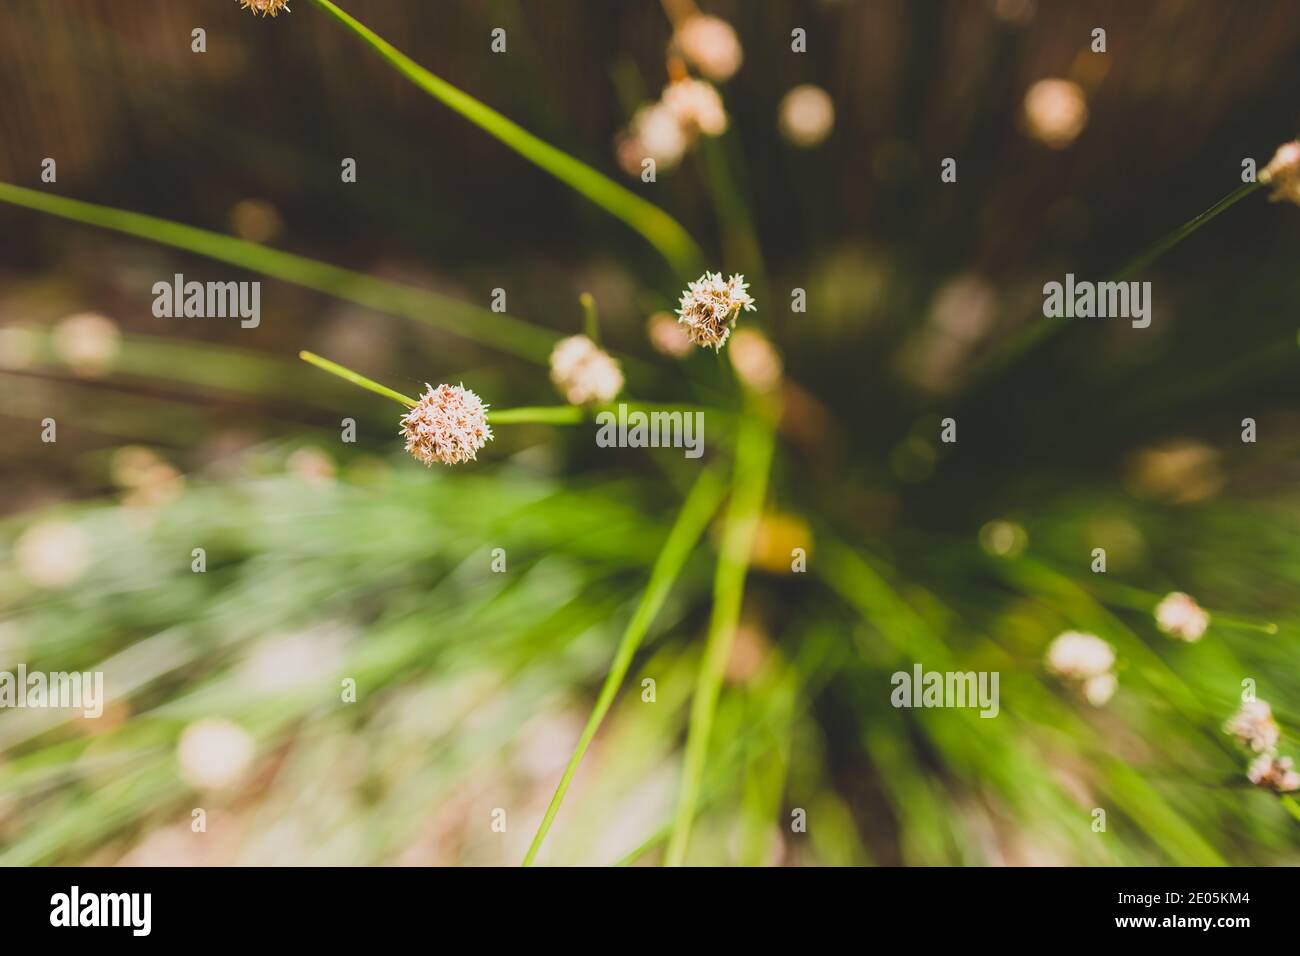 native Australian Ficinia Nodosa grass plant outdoor in sunny backyard shot at shallow depth of field Stock Photo